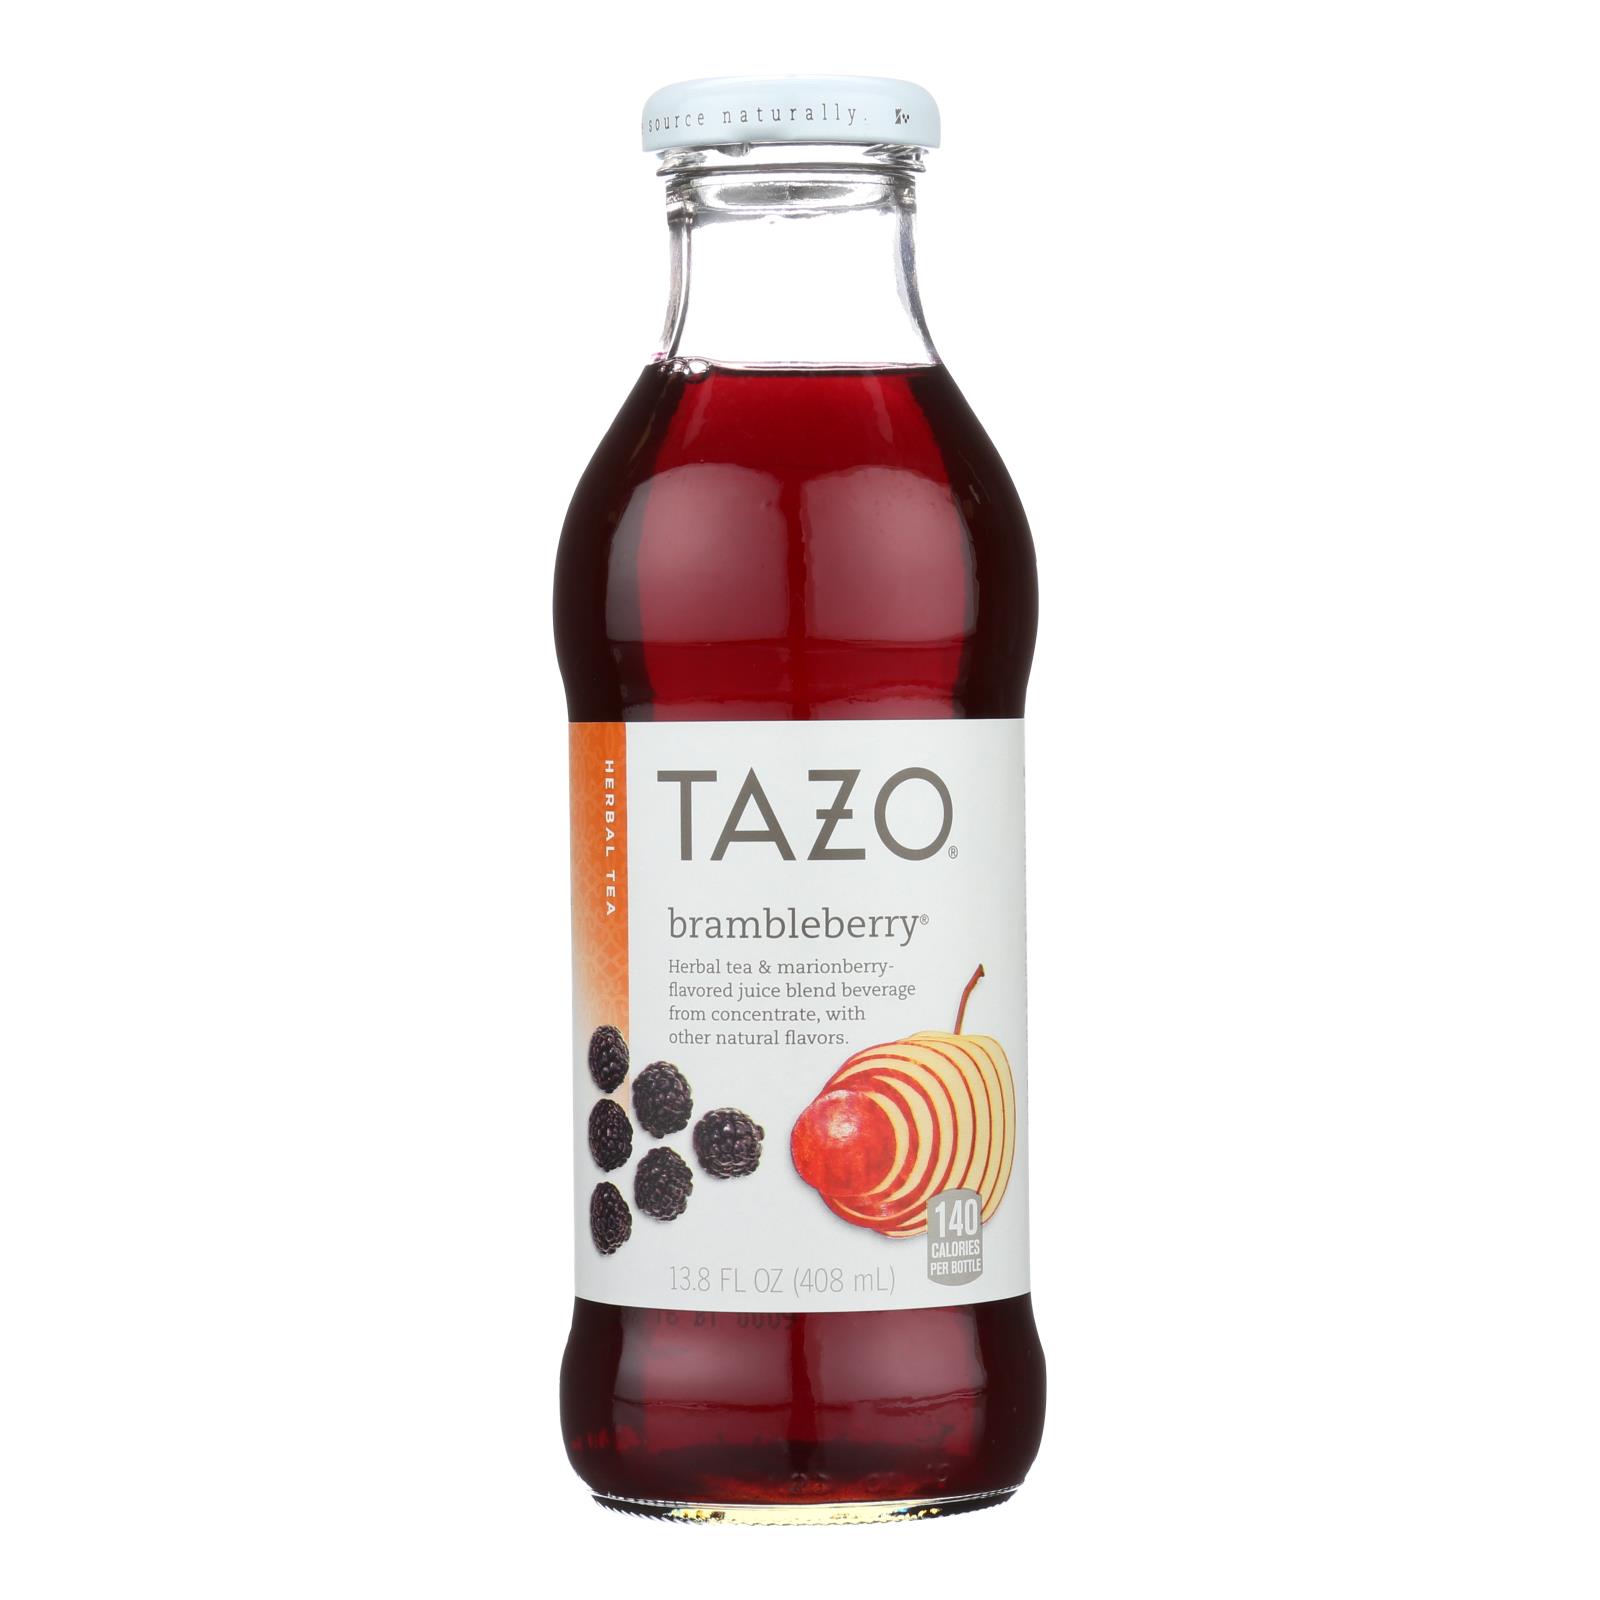 Tazo Brambleberry Herbal Tea & Marionberry-Flavored Juice Blend - 12개 묶음상품 - 13.8 FZ